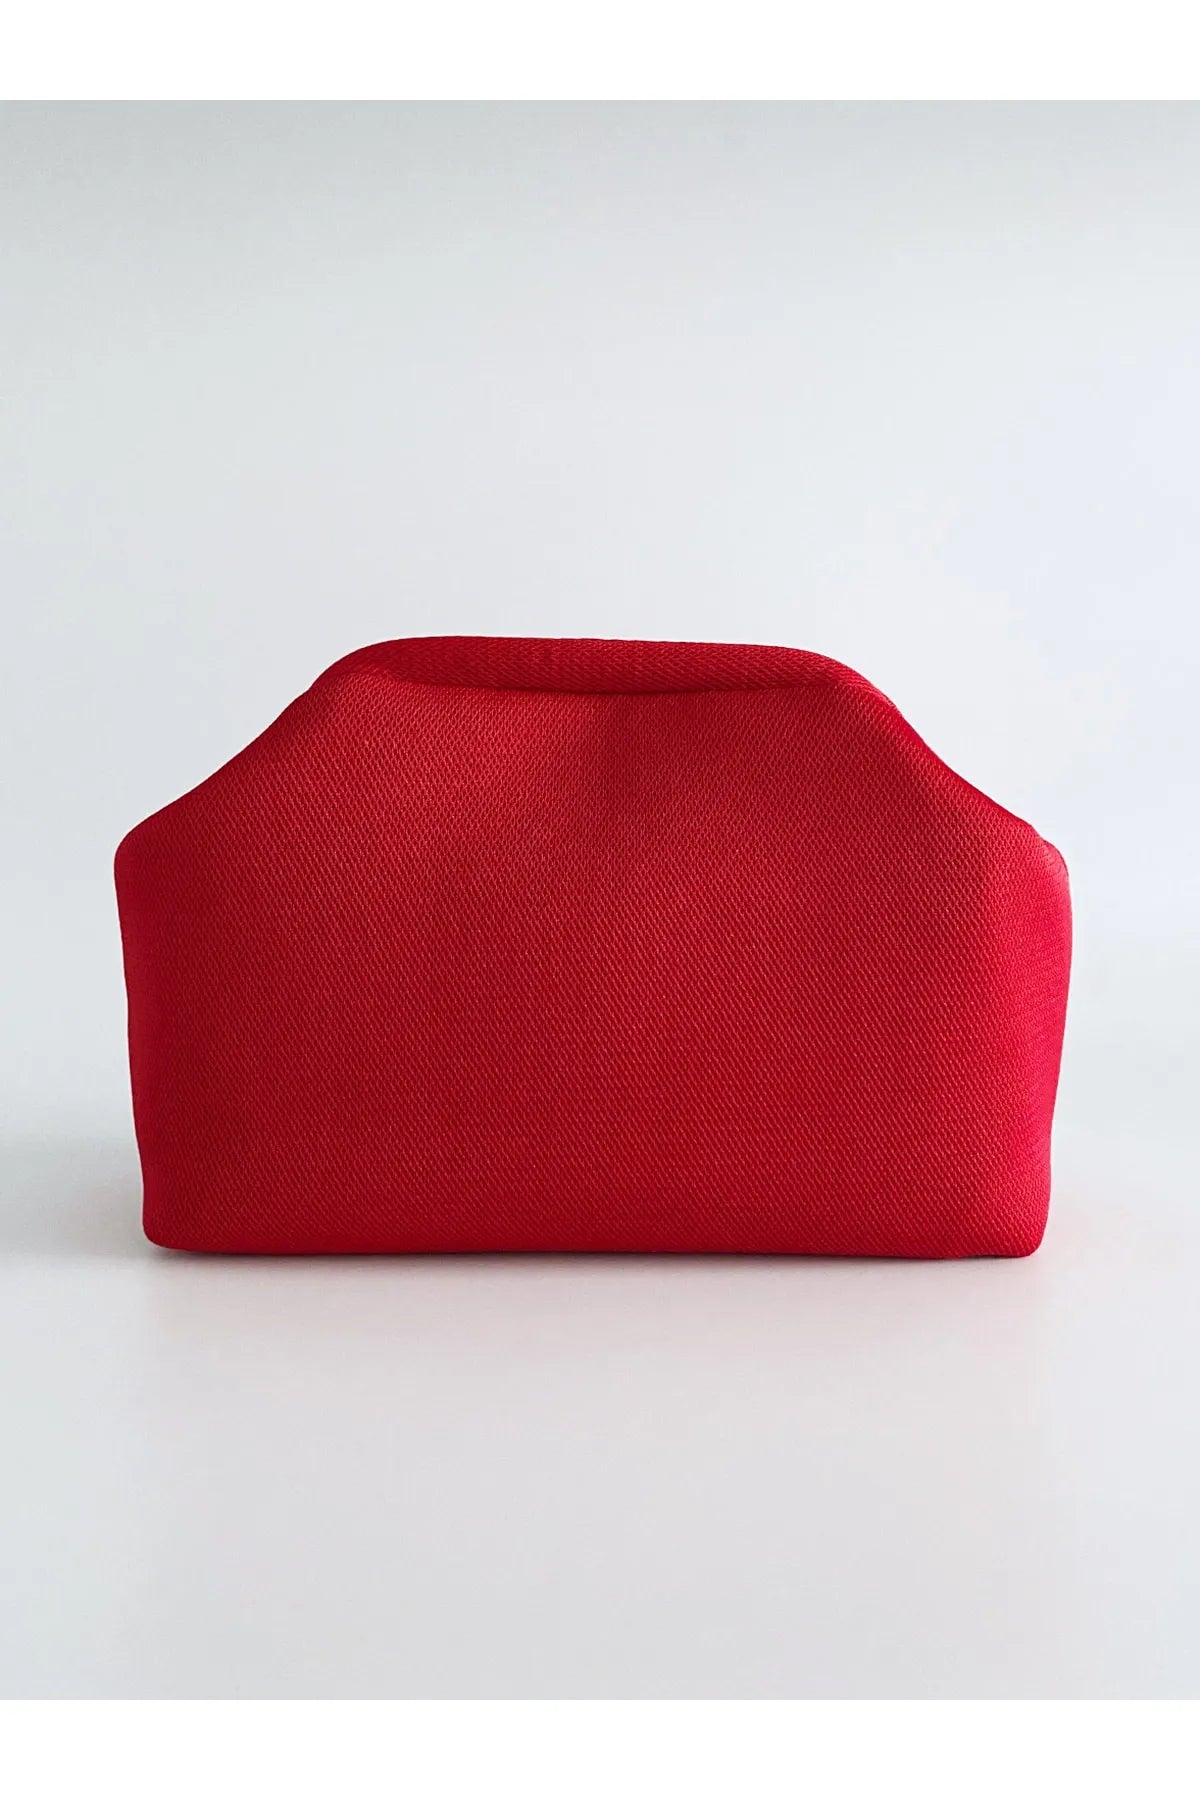 Red Clutch Bag clutch LUNARITY GARAGE   